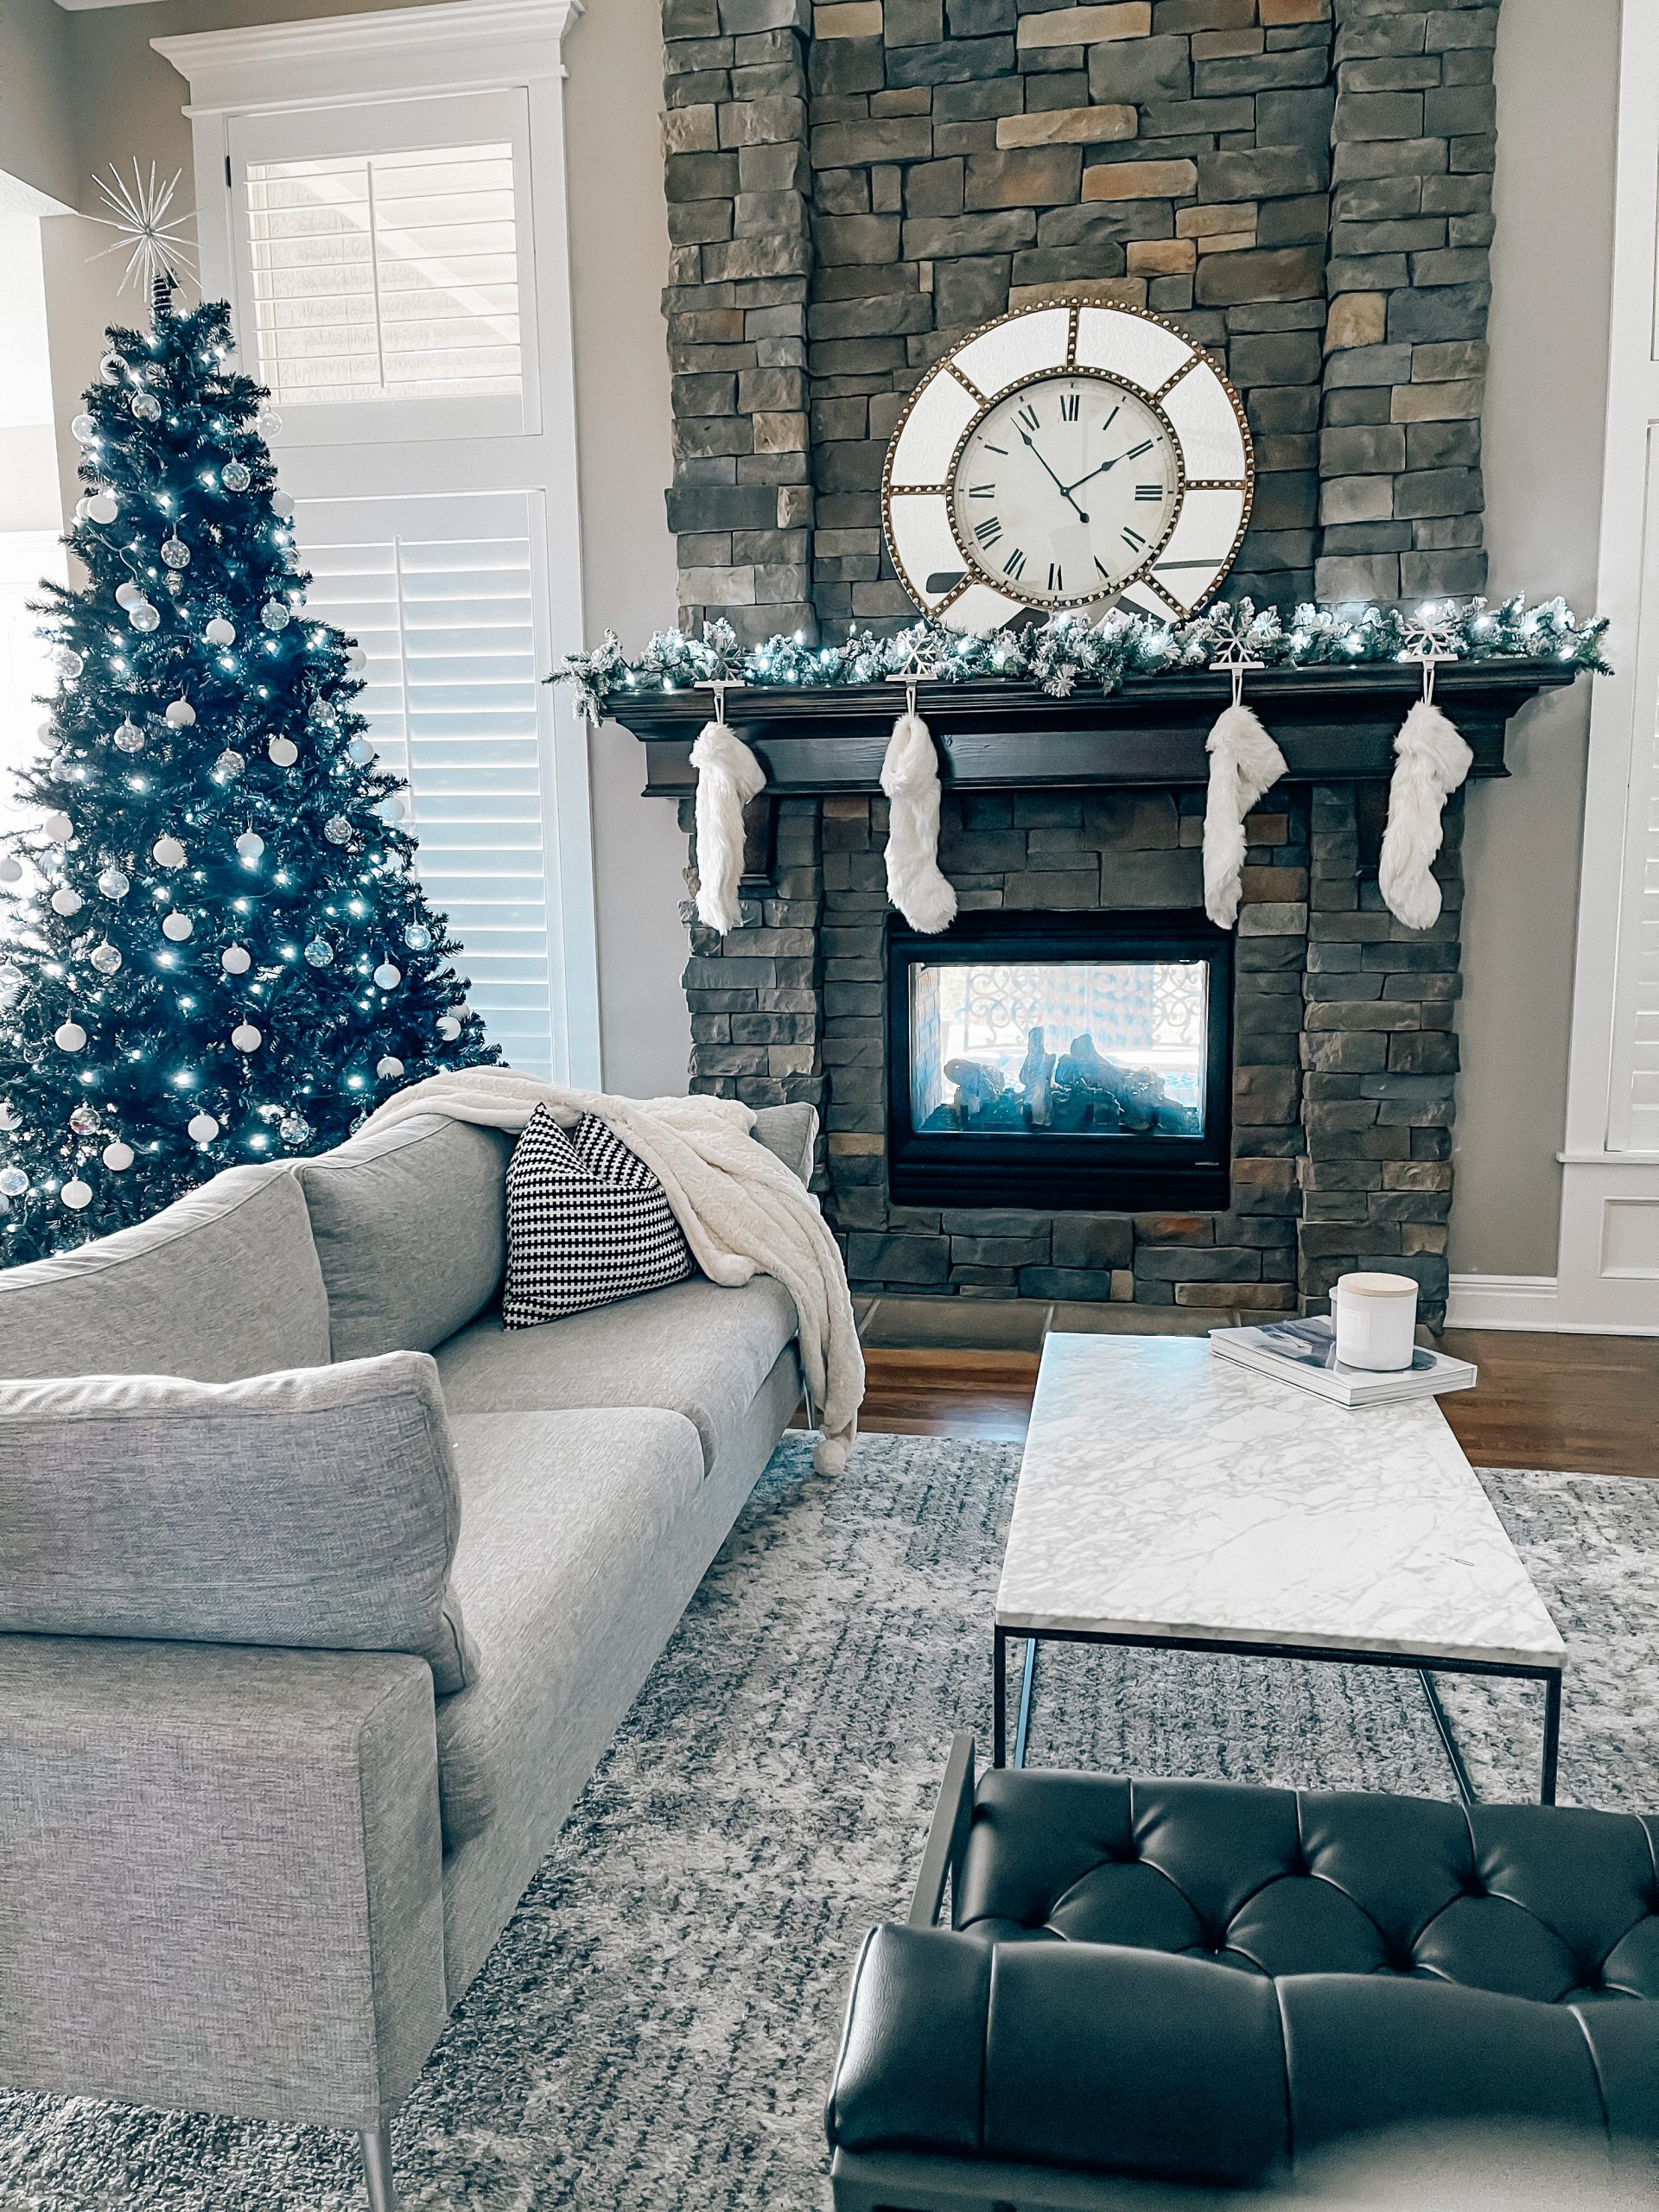 Modern Living Room Christmas Decor - Blogger Tricia Nibarger shares living room Christmas decor in her modern home, featuring a black Christmas tree and a monochrome Christmas theme! #modern #christmasdecor #blackchristmastree 